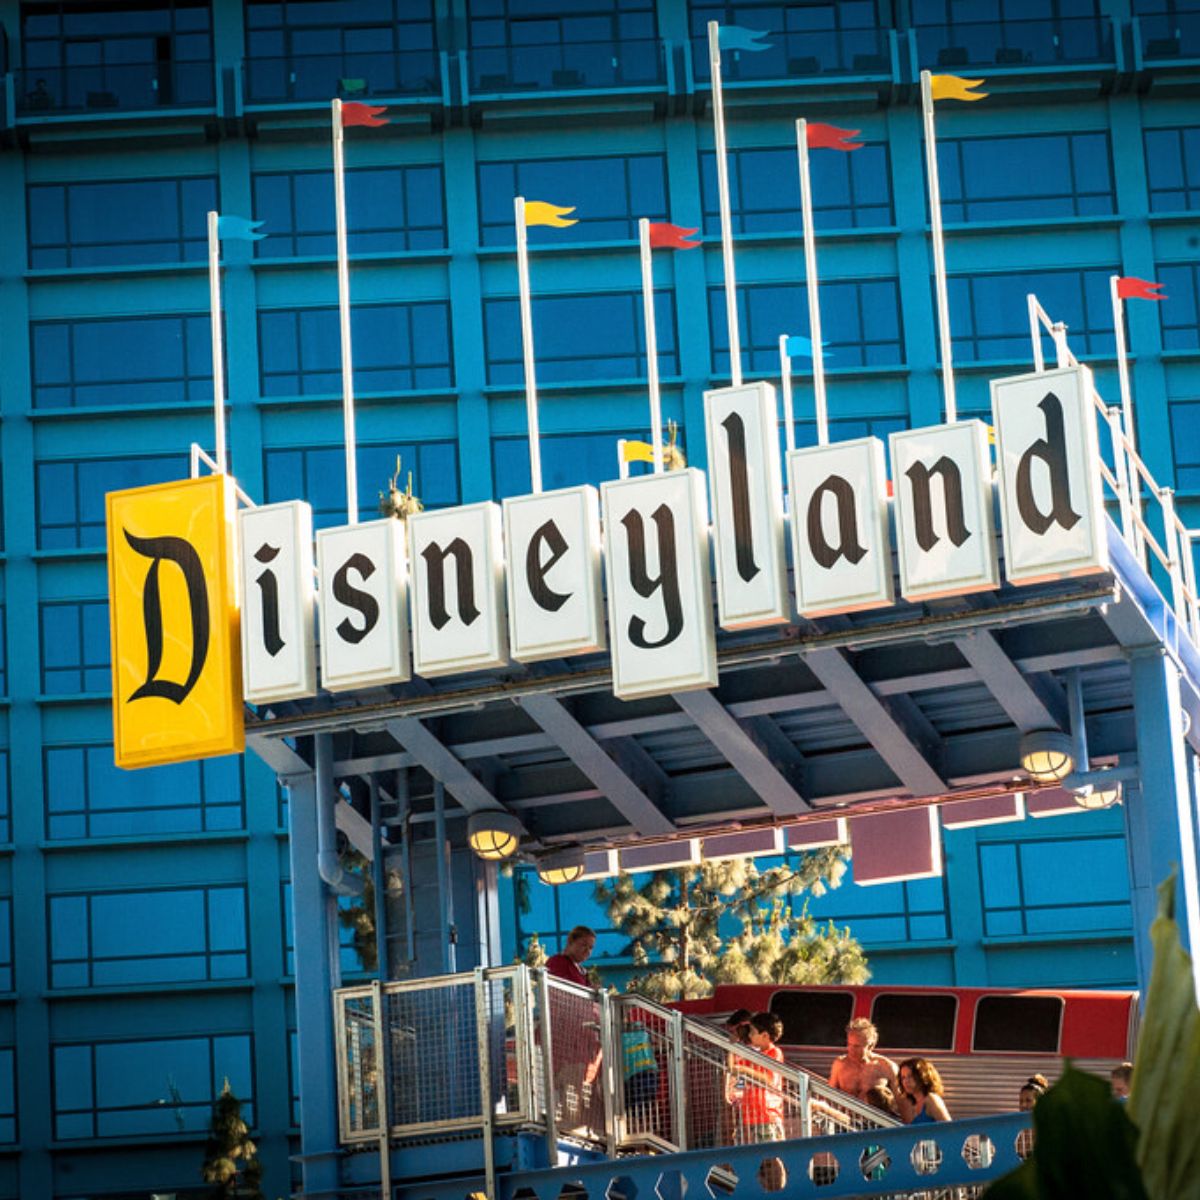 The classic Disneyland sign